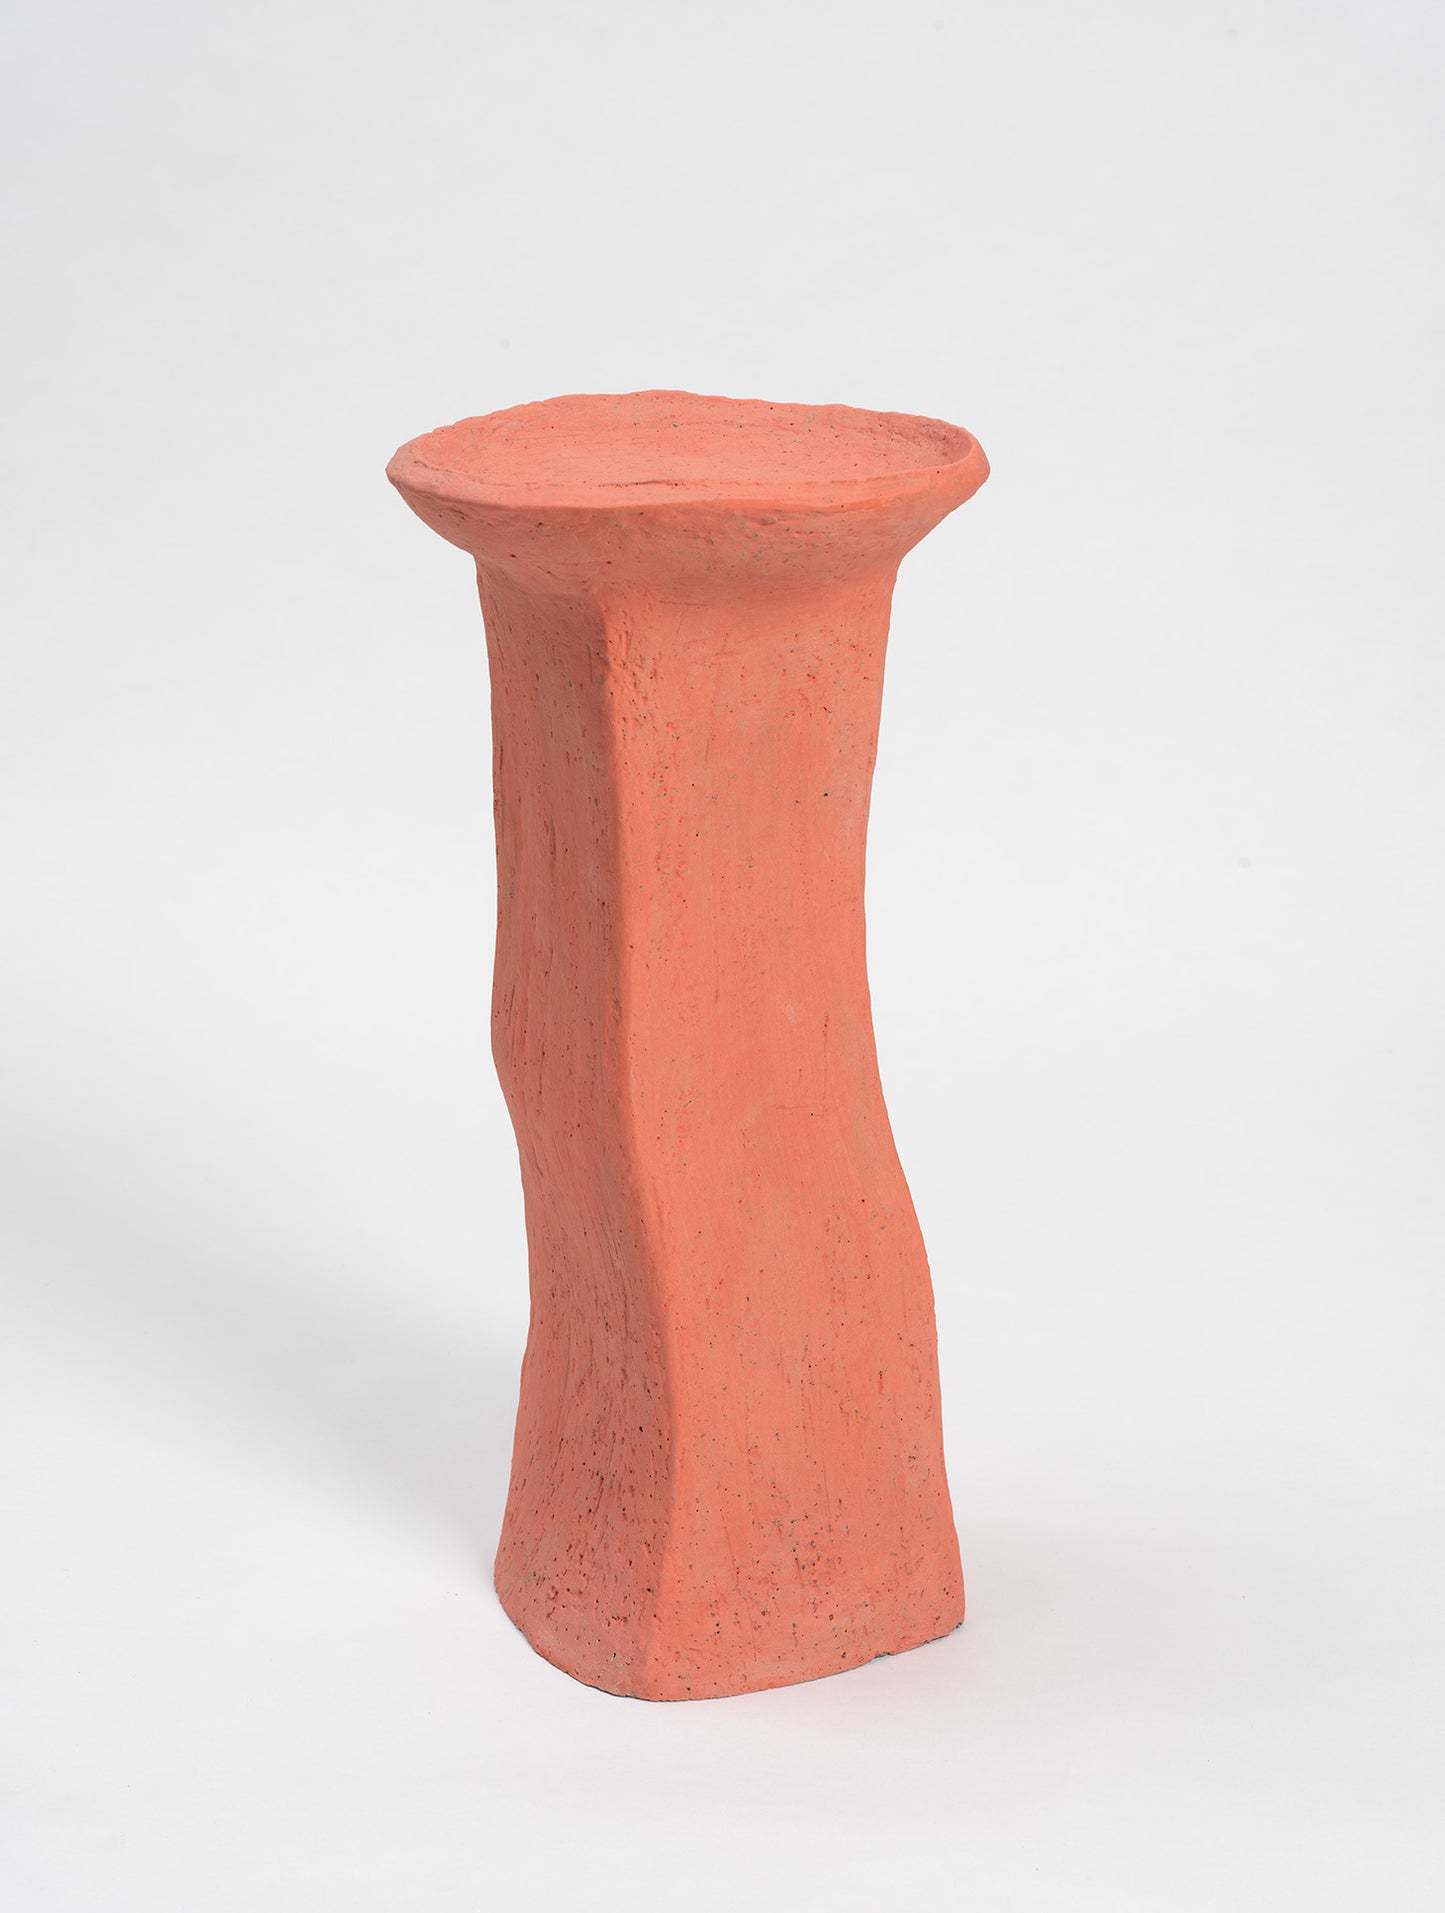 Christine Roland, ‘Orange table’, 2020